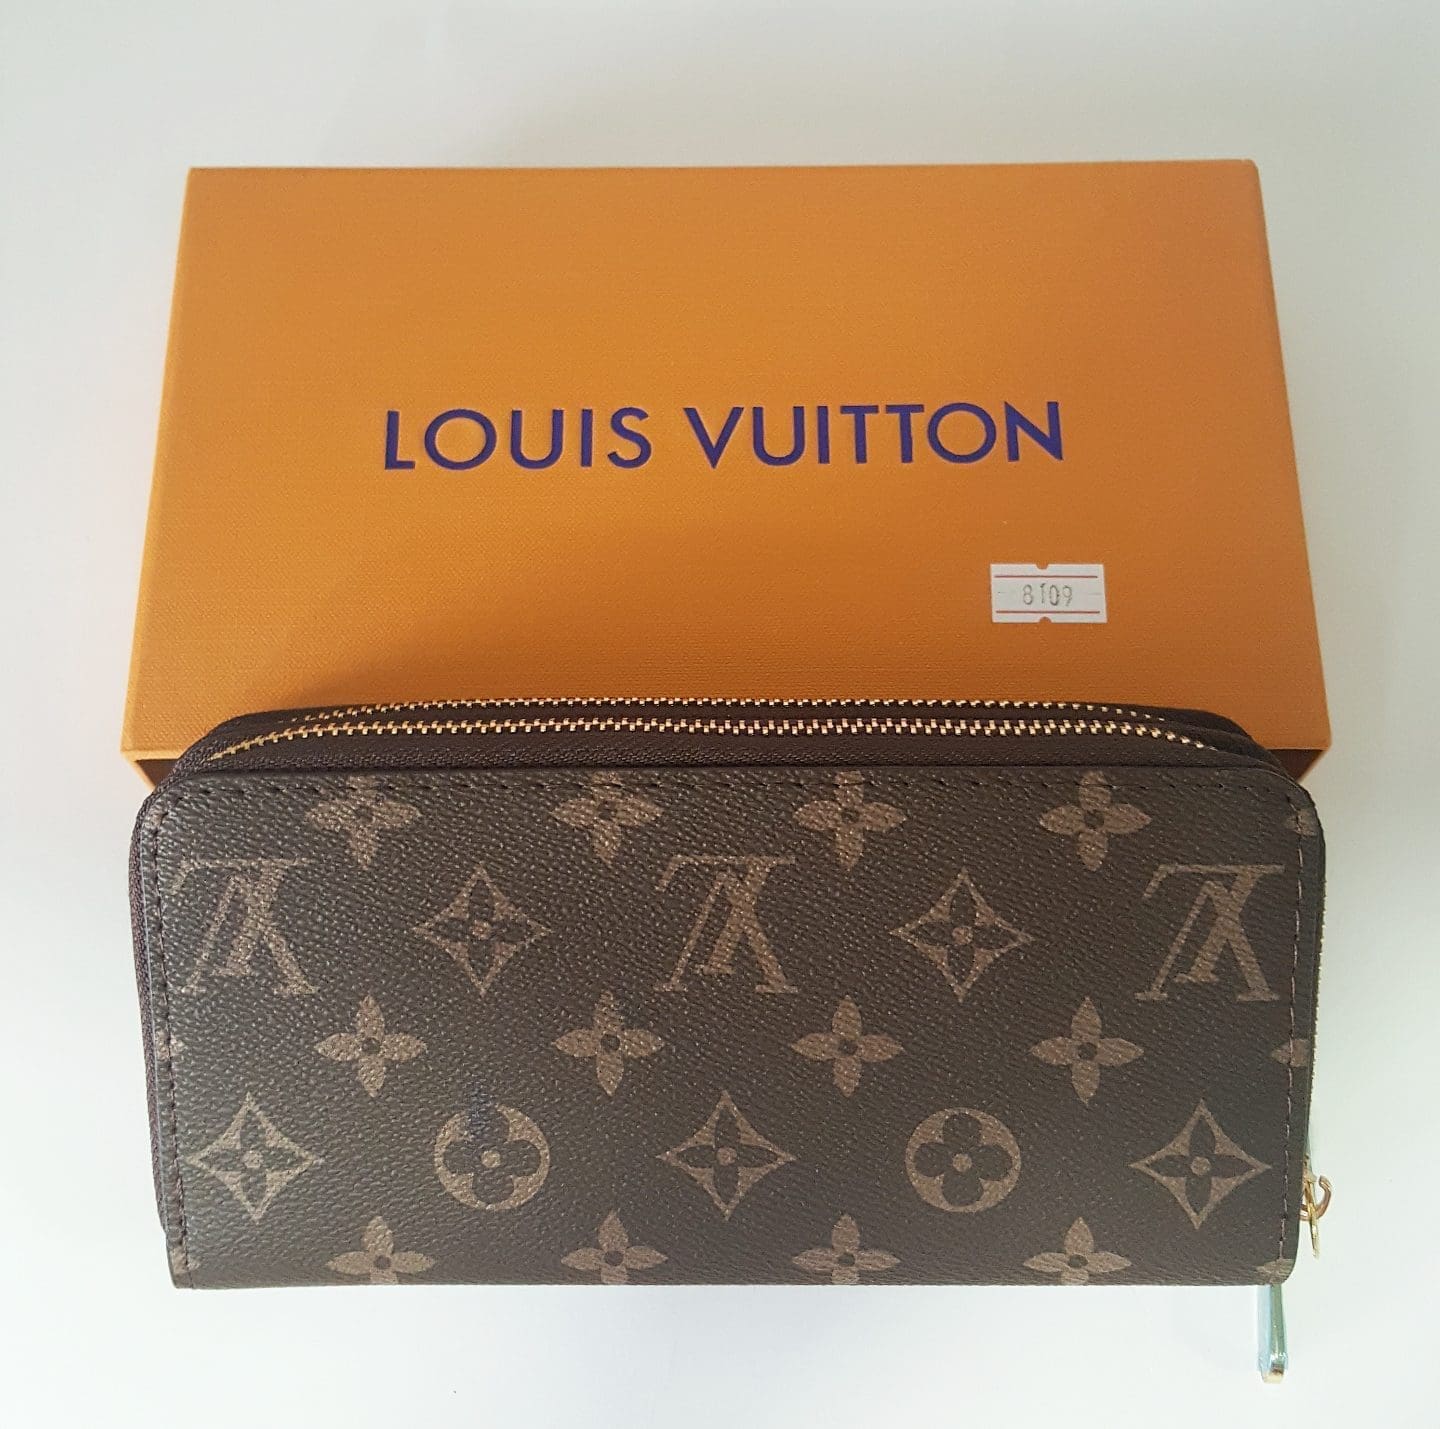 8109 Louis vuitton monogram wallet